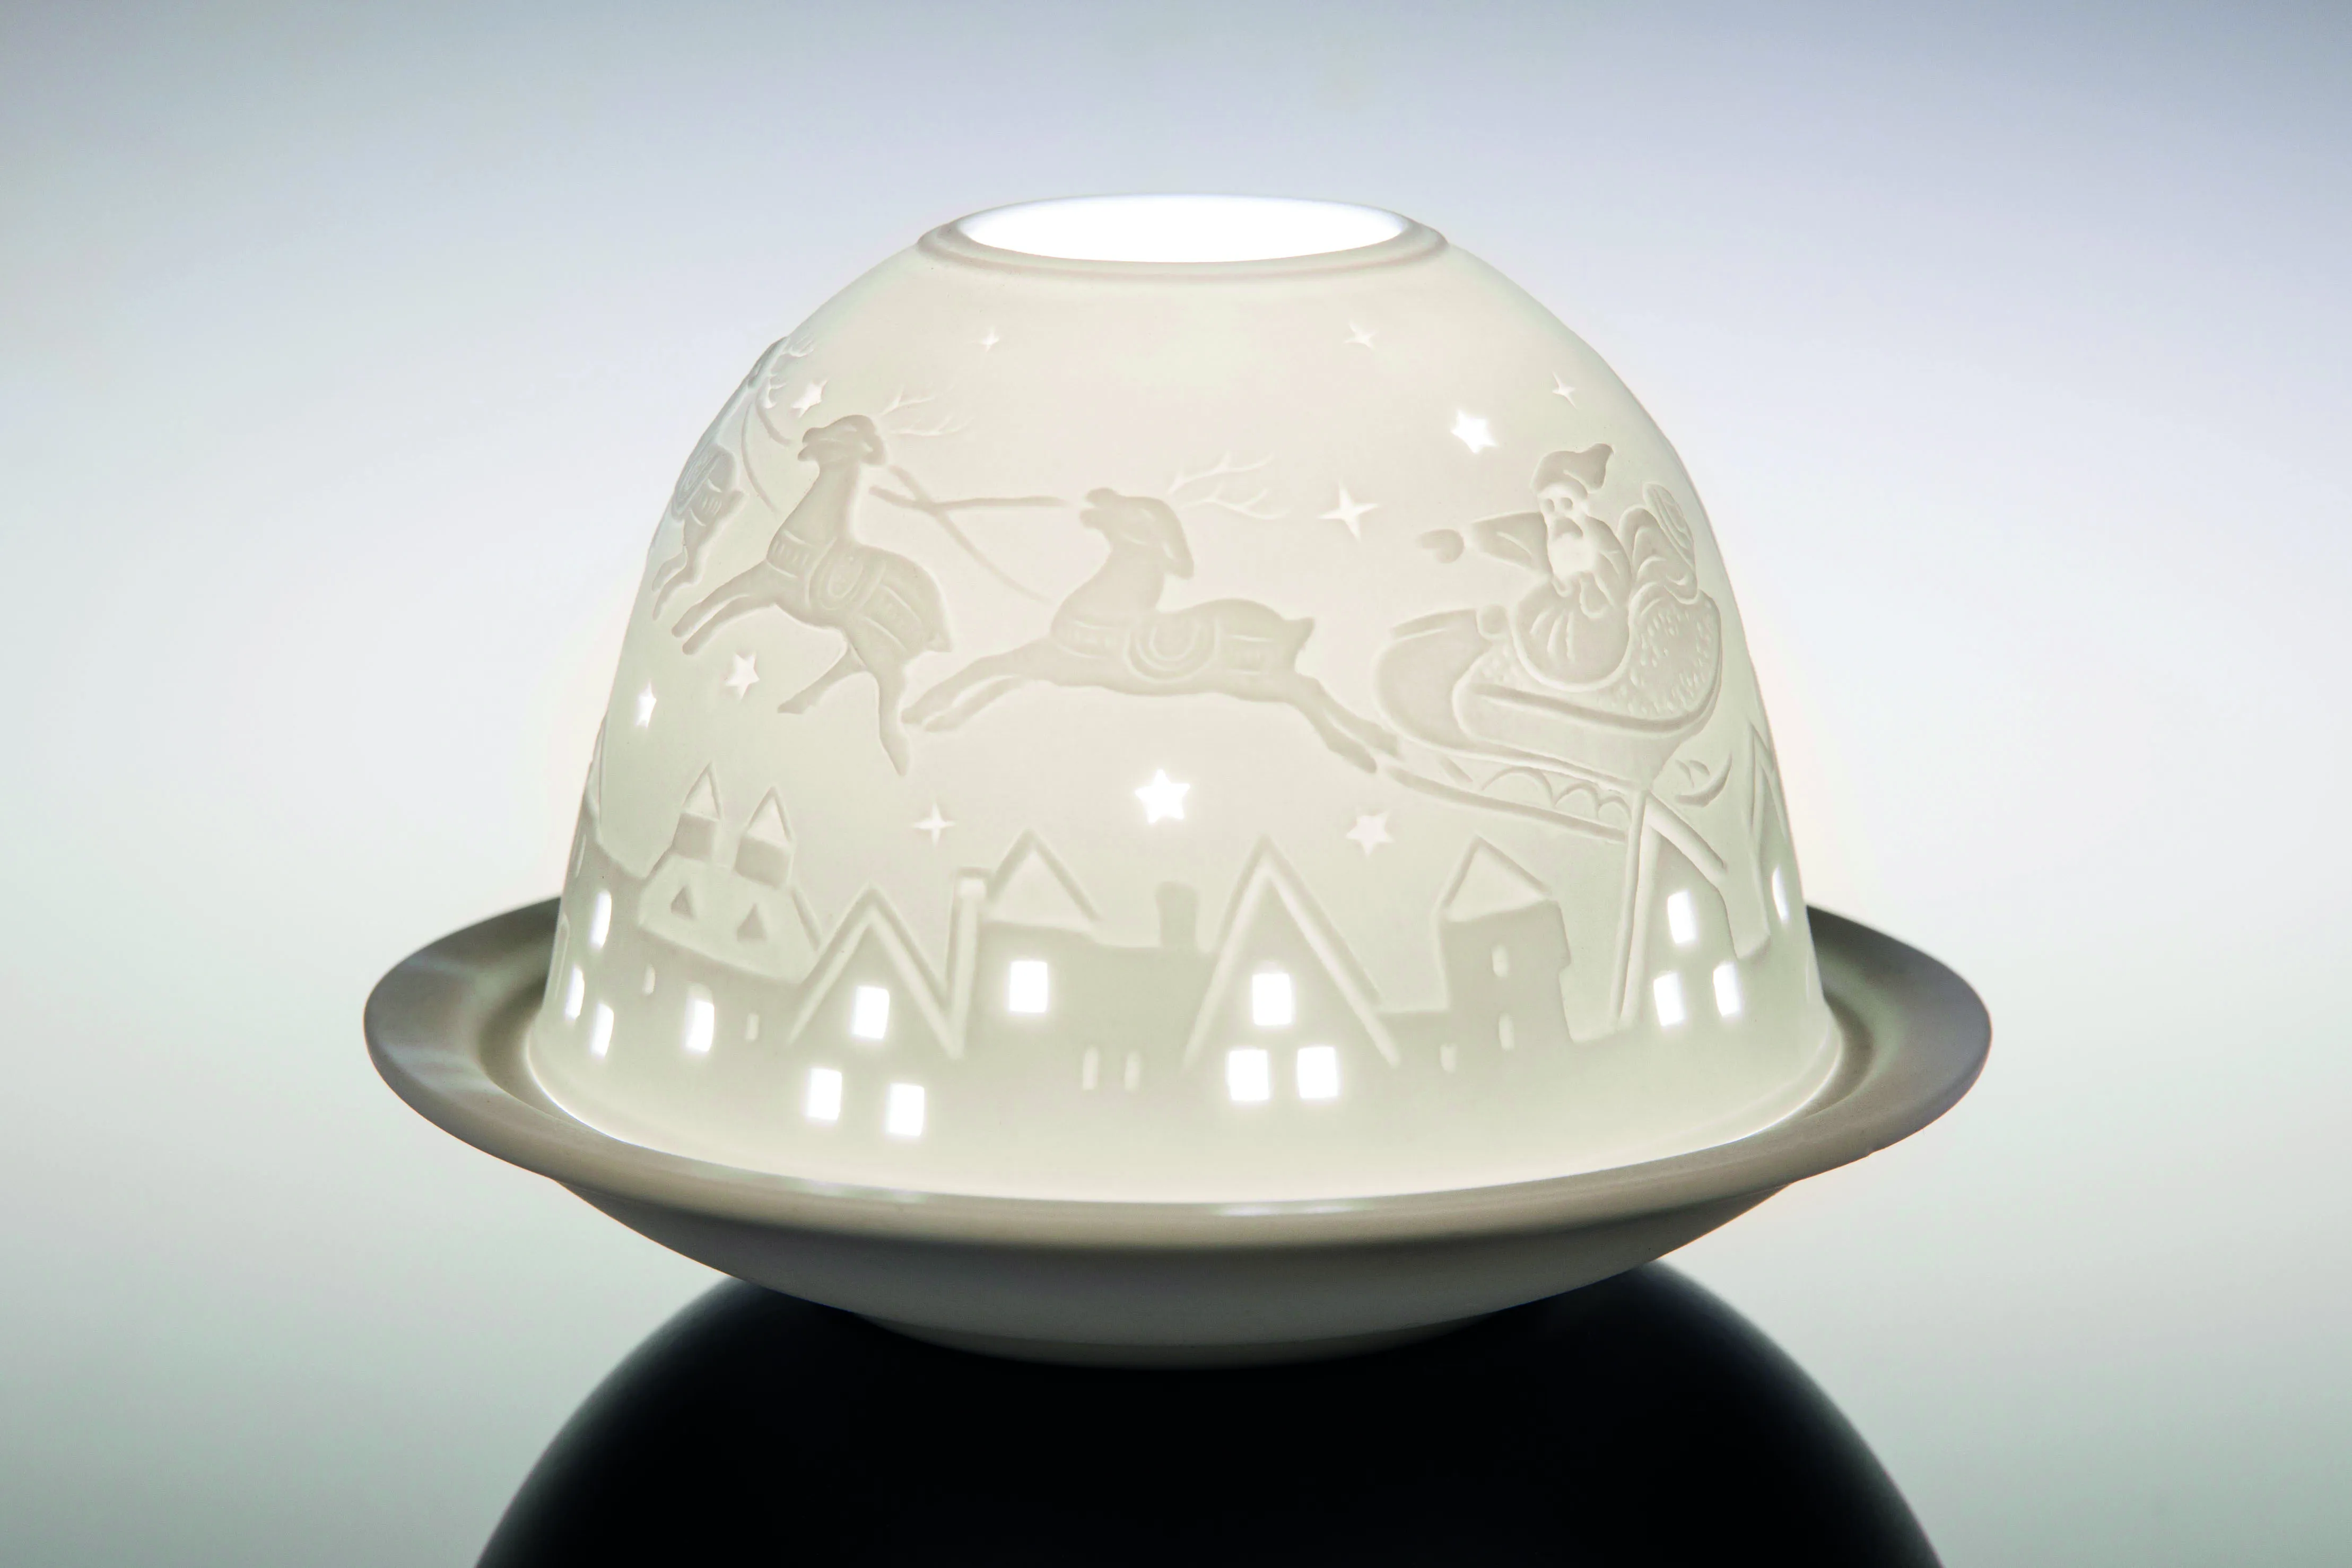 Dome-Light, Bescherung - Leuchtobjekt aus Porzellan